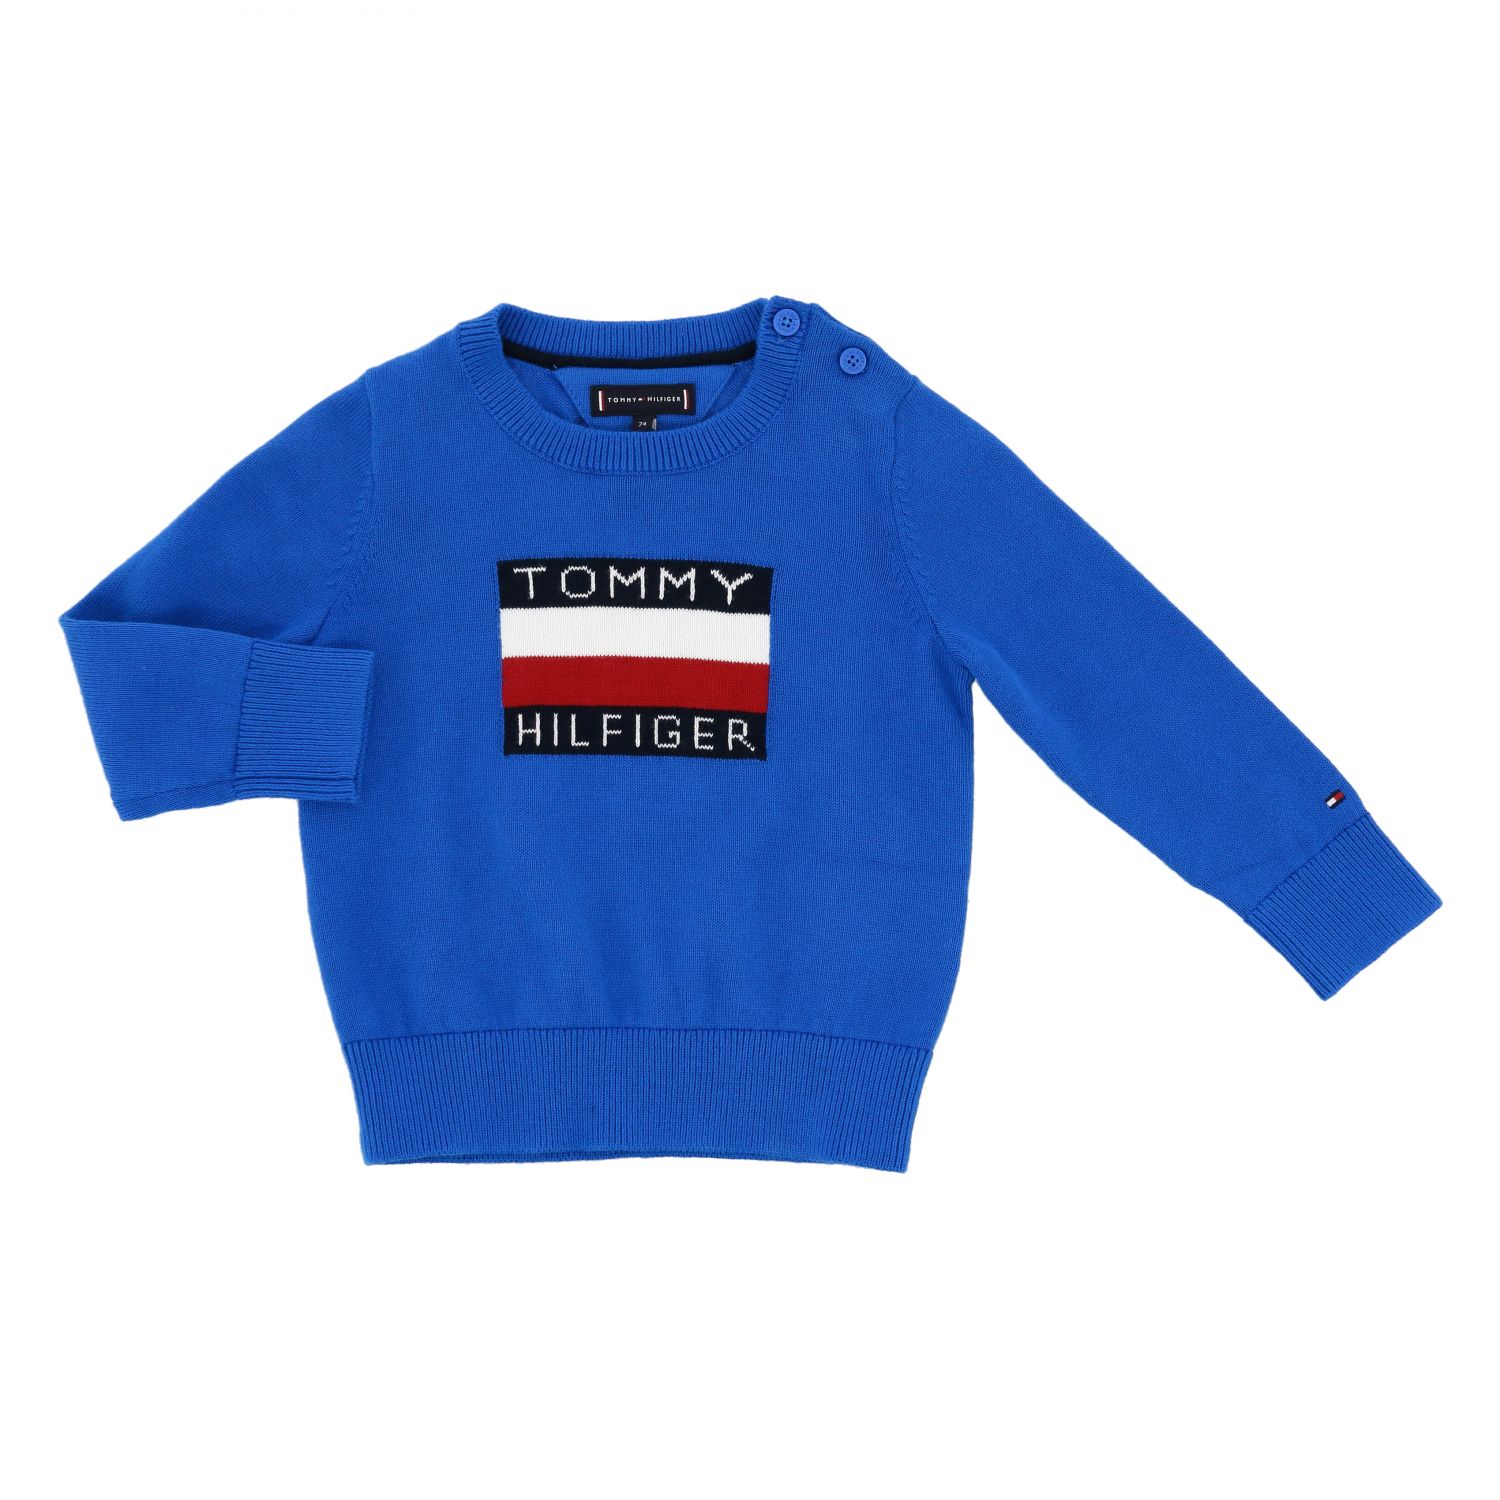 tommy hilfiger blue sweatshirt